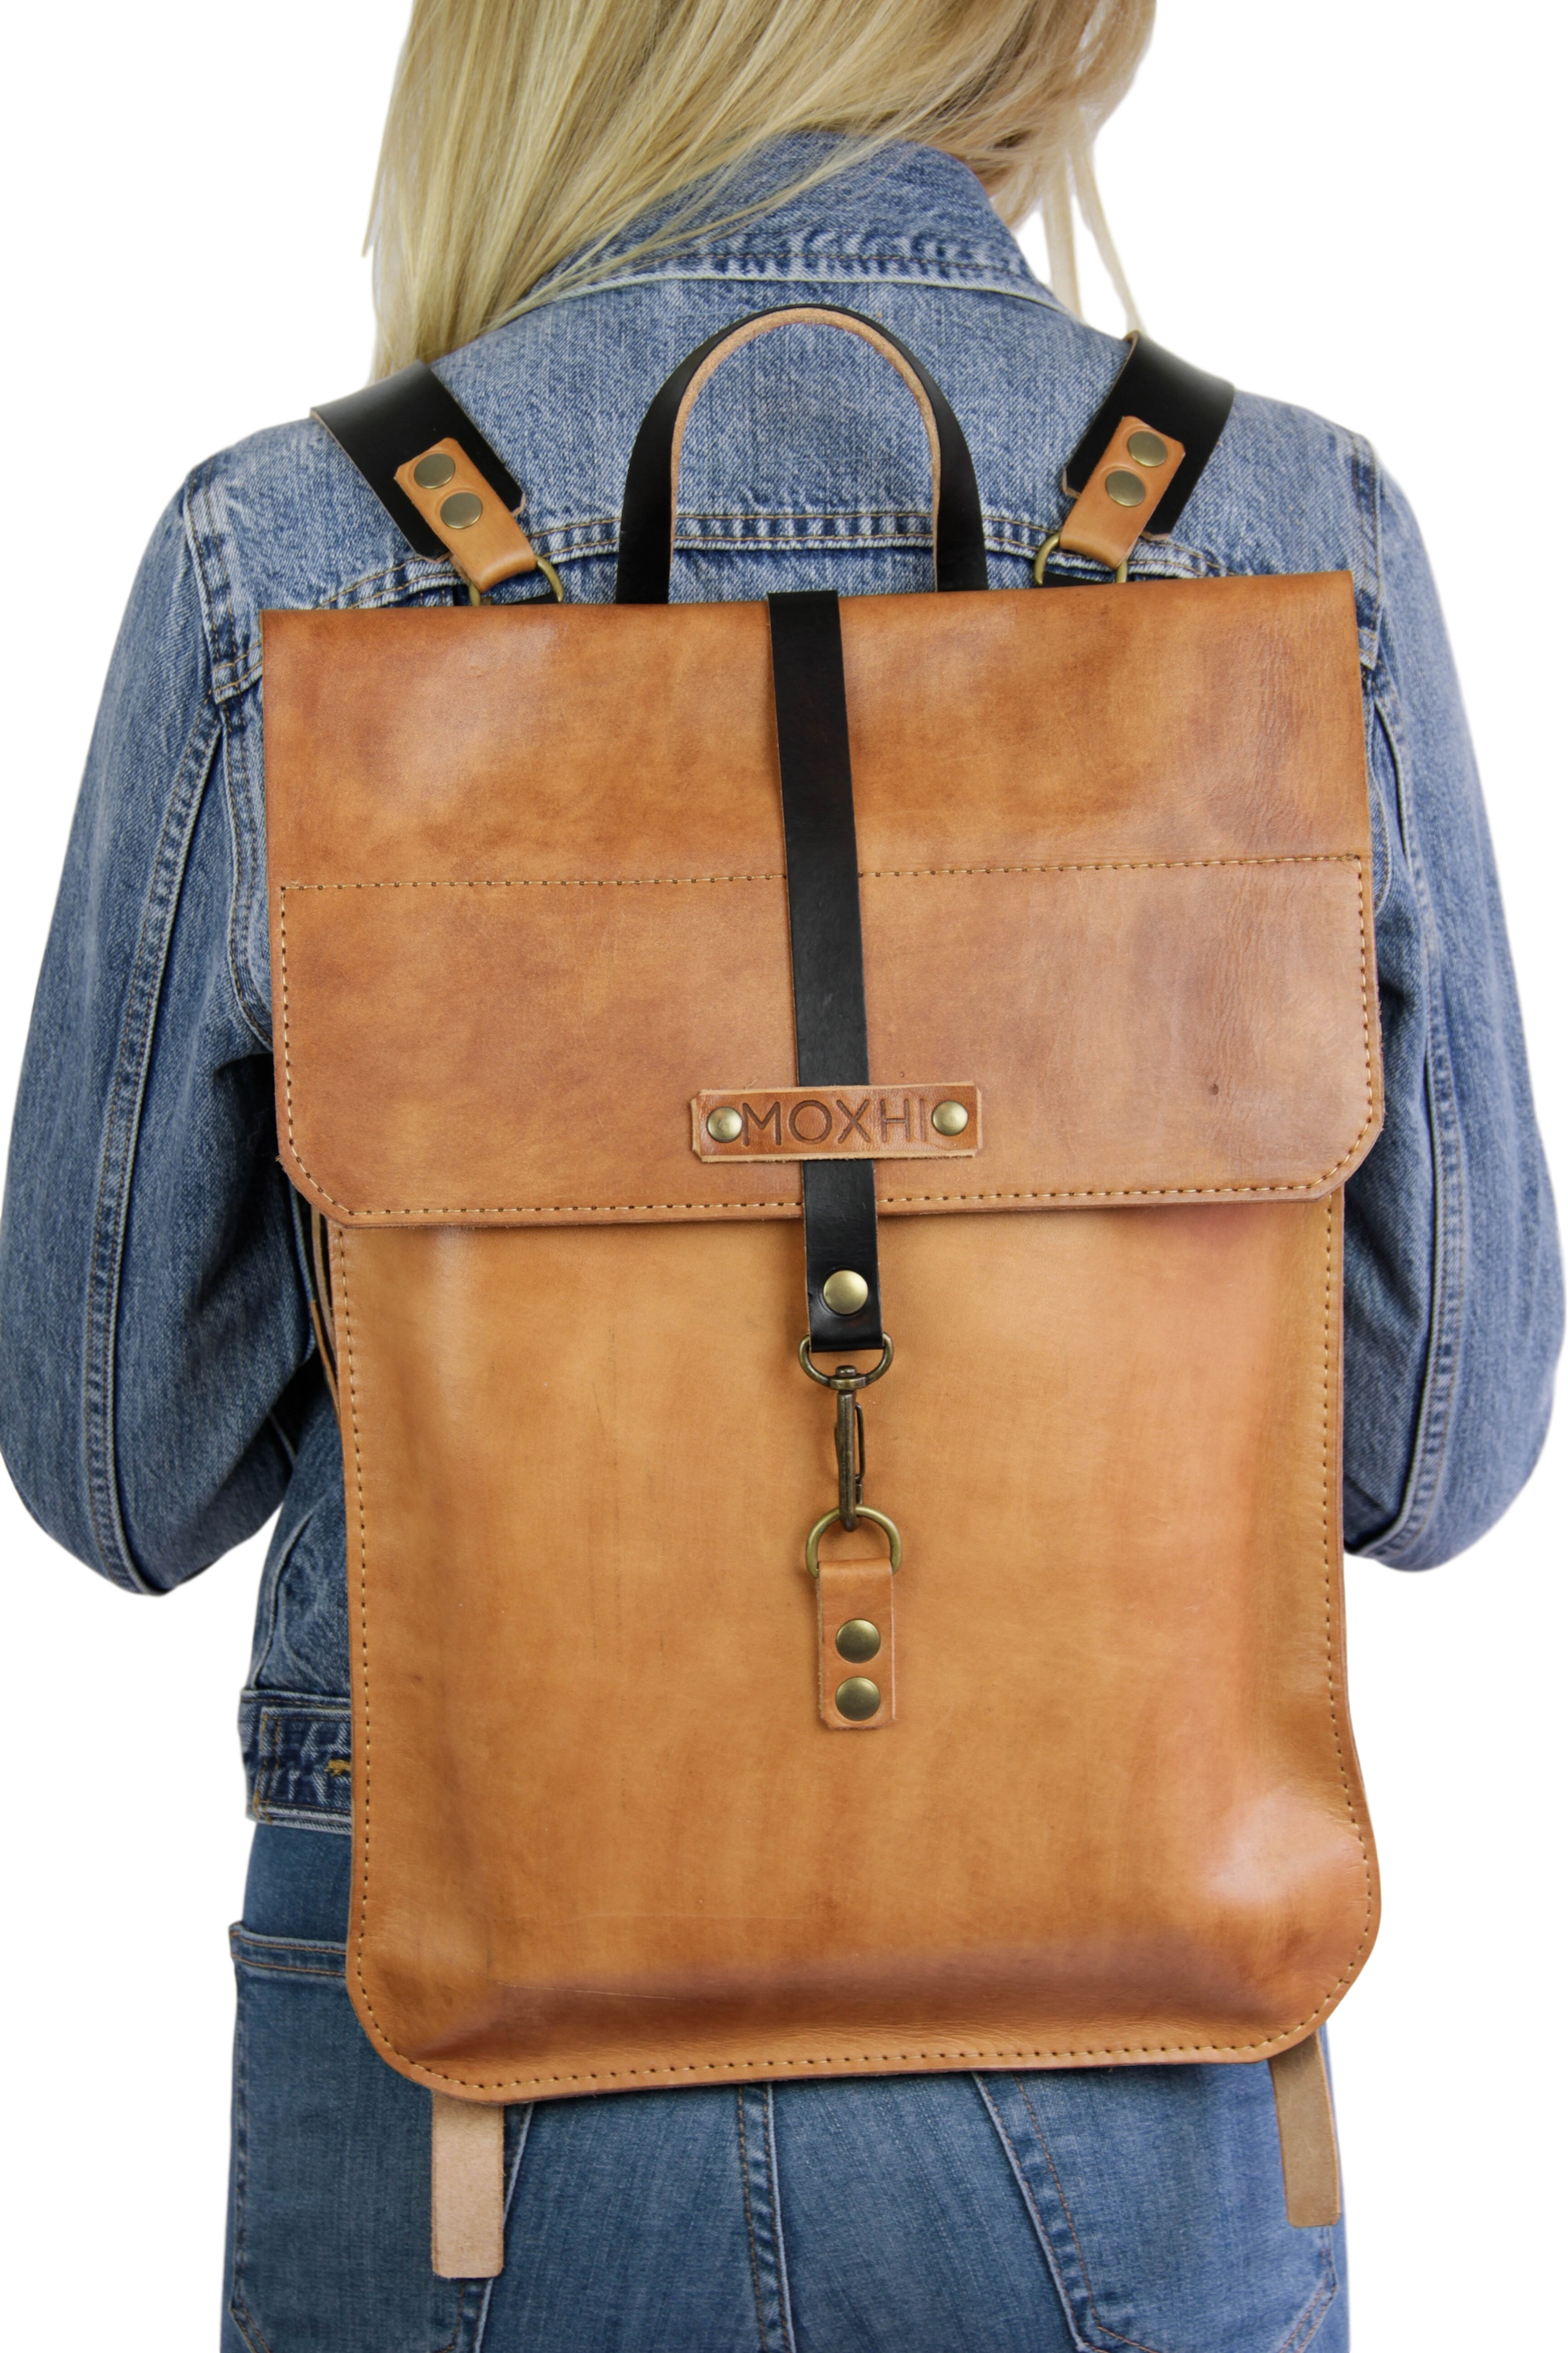 Fair trade leather backpack handmade